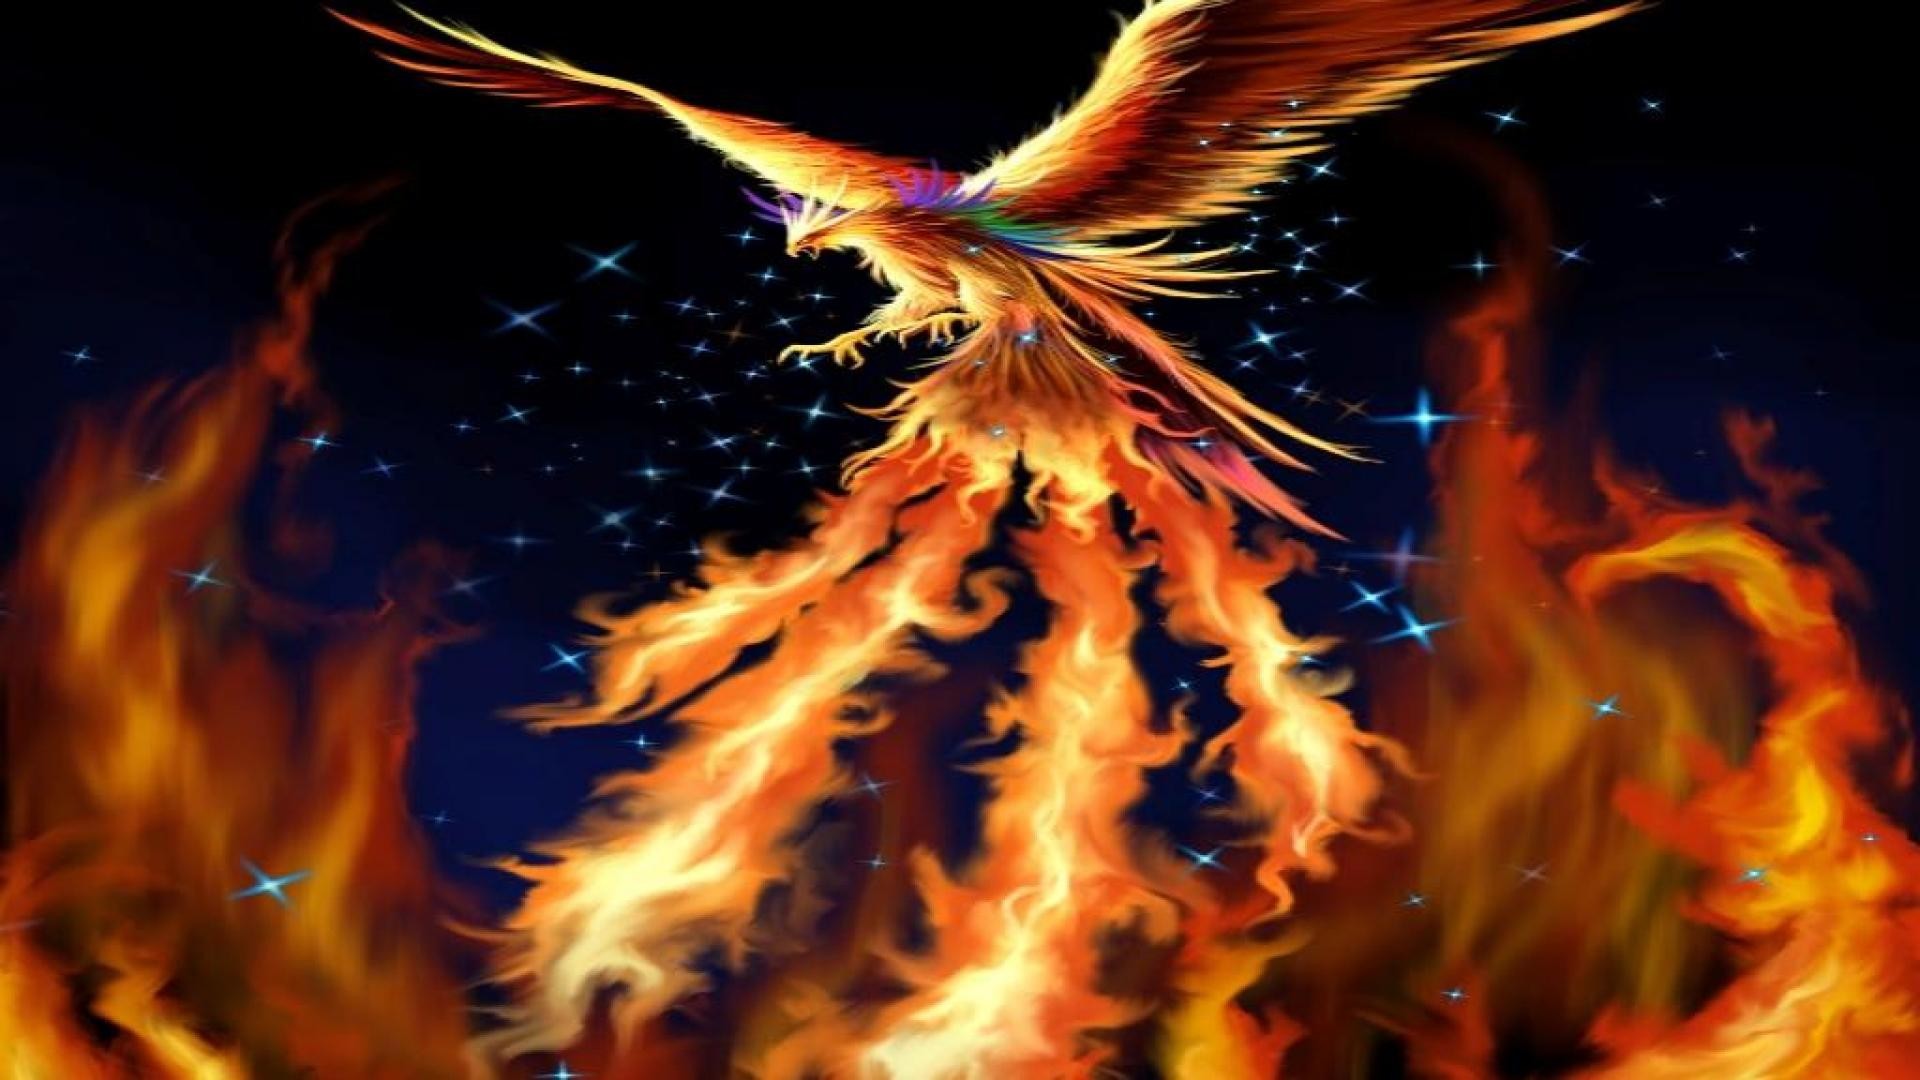 1920x1080 Fantasy fire bird phoenix wallpaper HD.